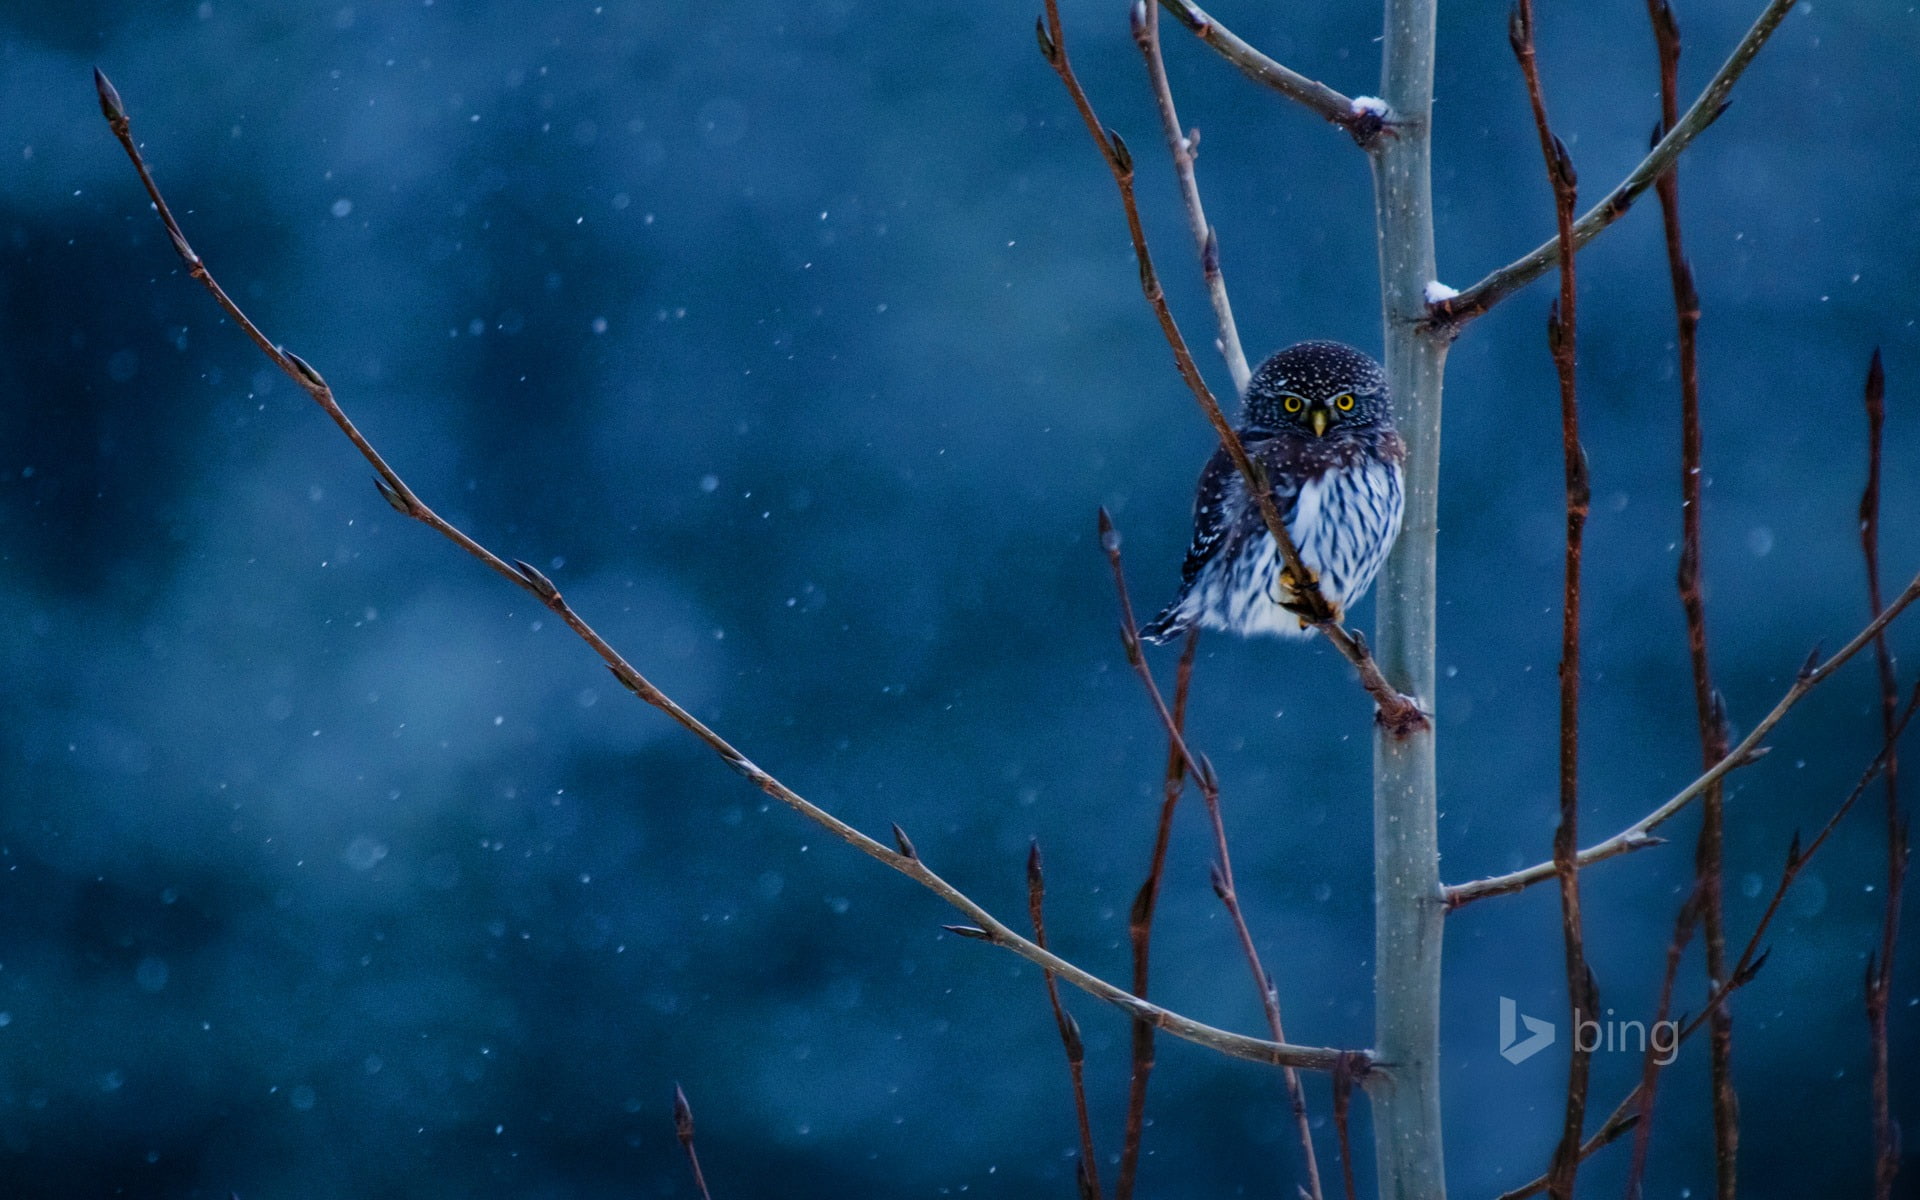 Snow owl-2015 Bing theme wallpaper, branch, animal wildlife, animals in the wild